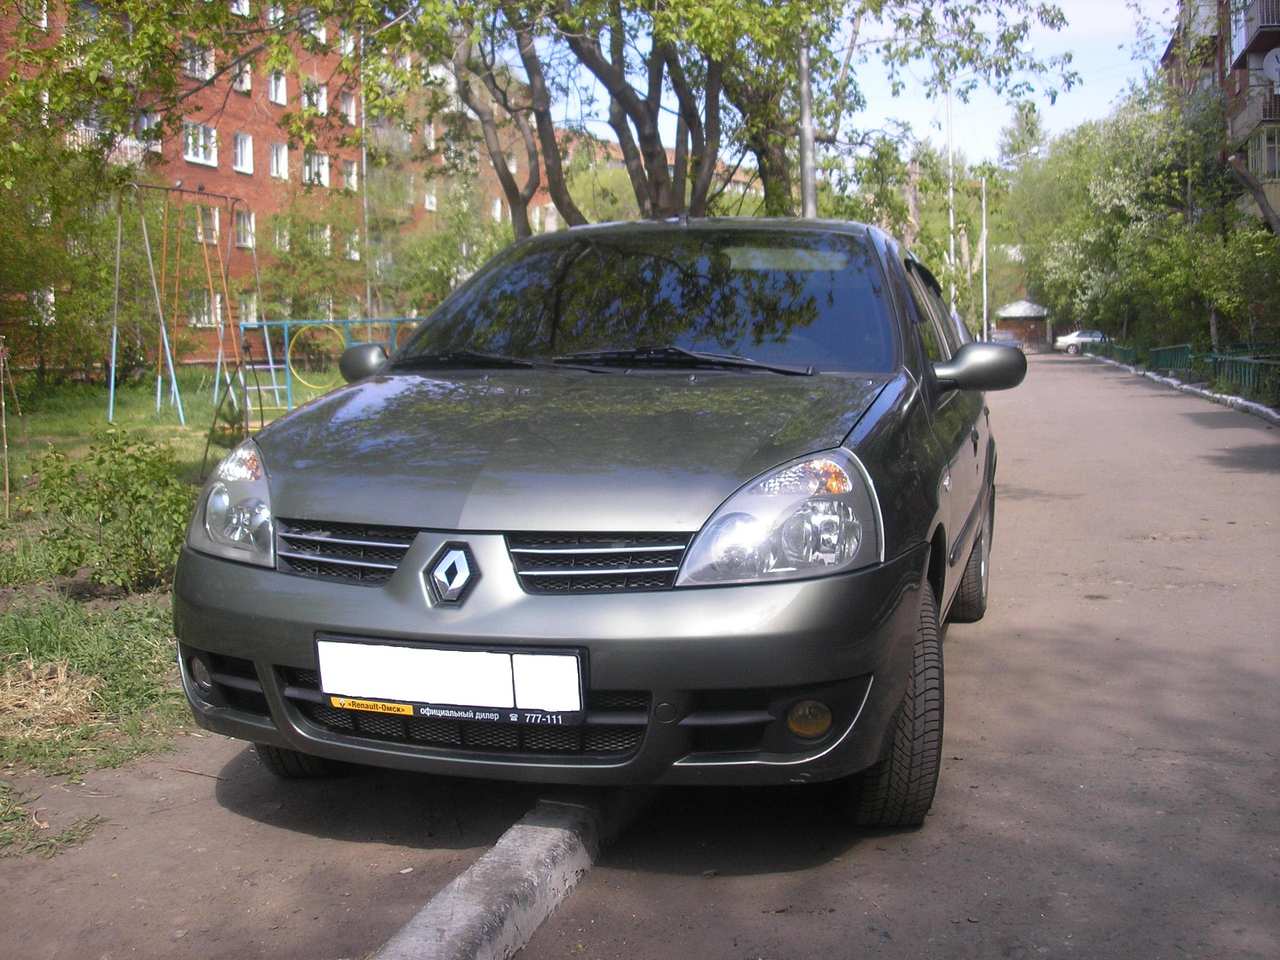 Used 2008 Renault Symbol Photos